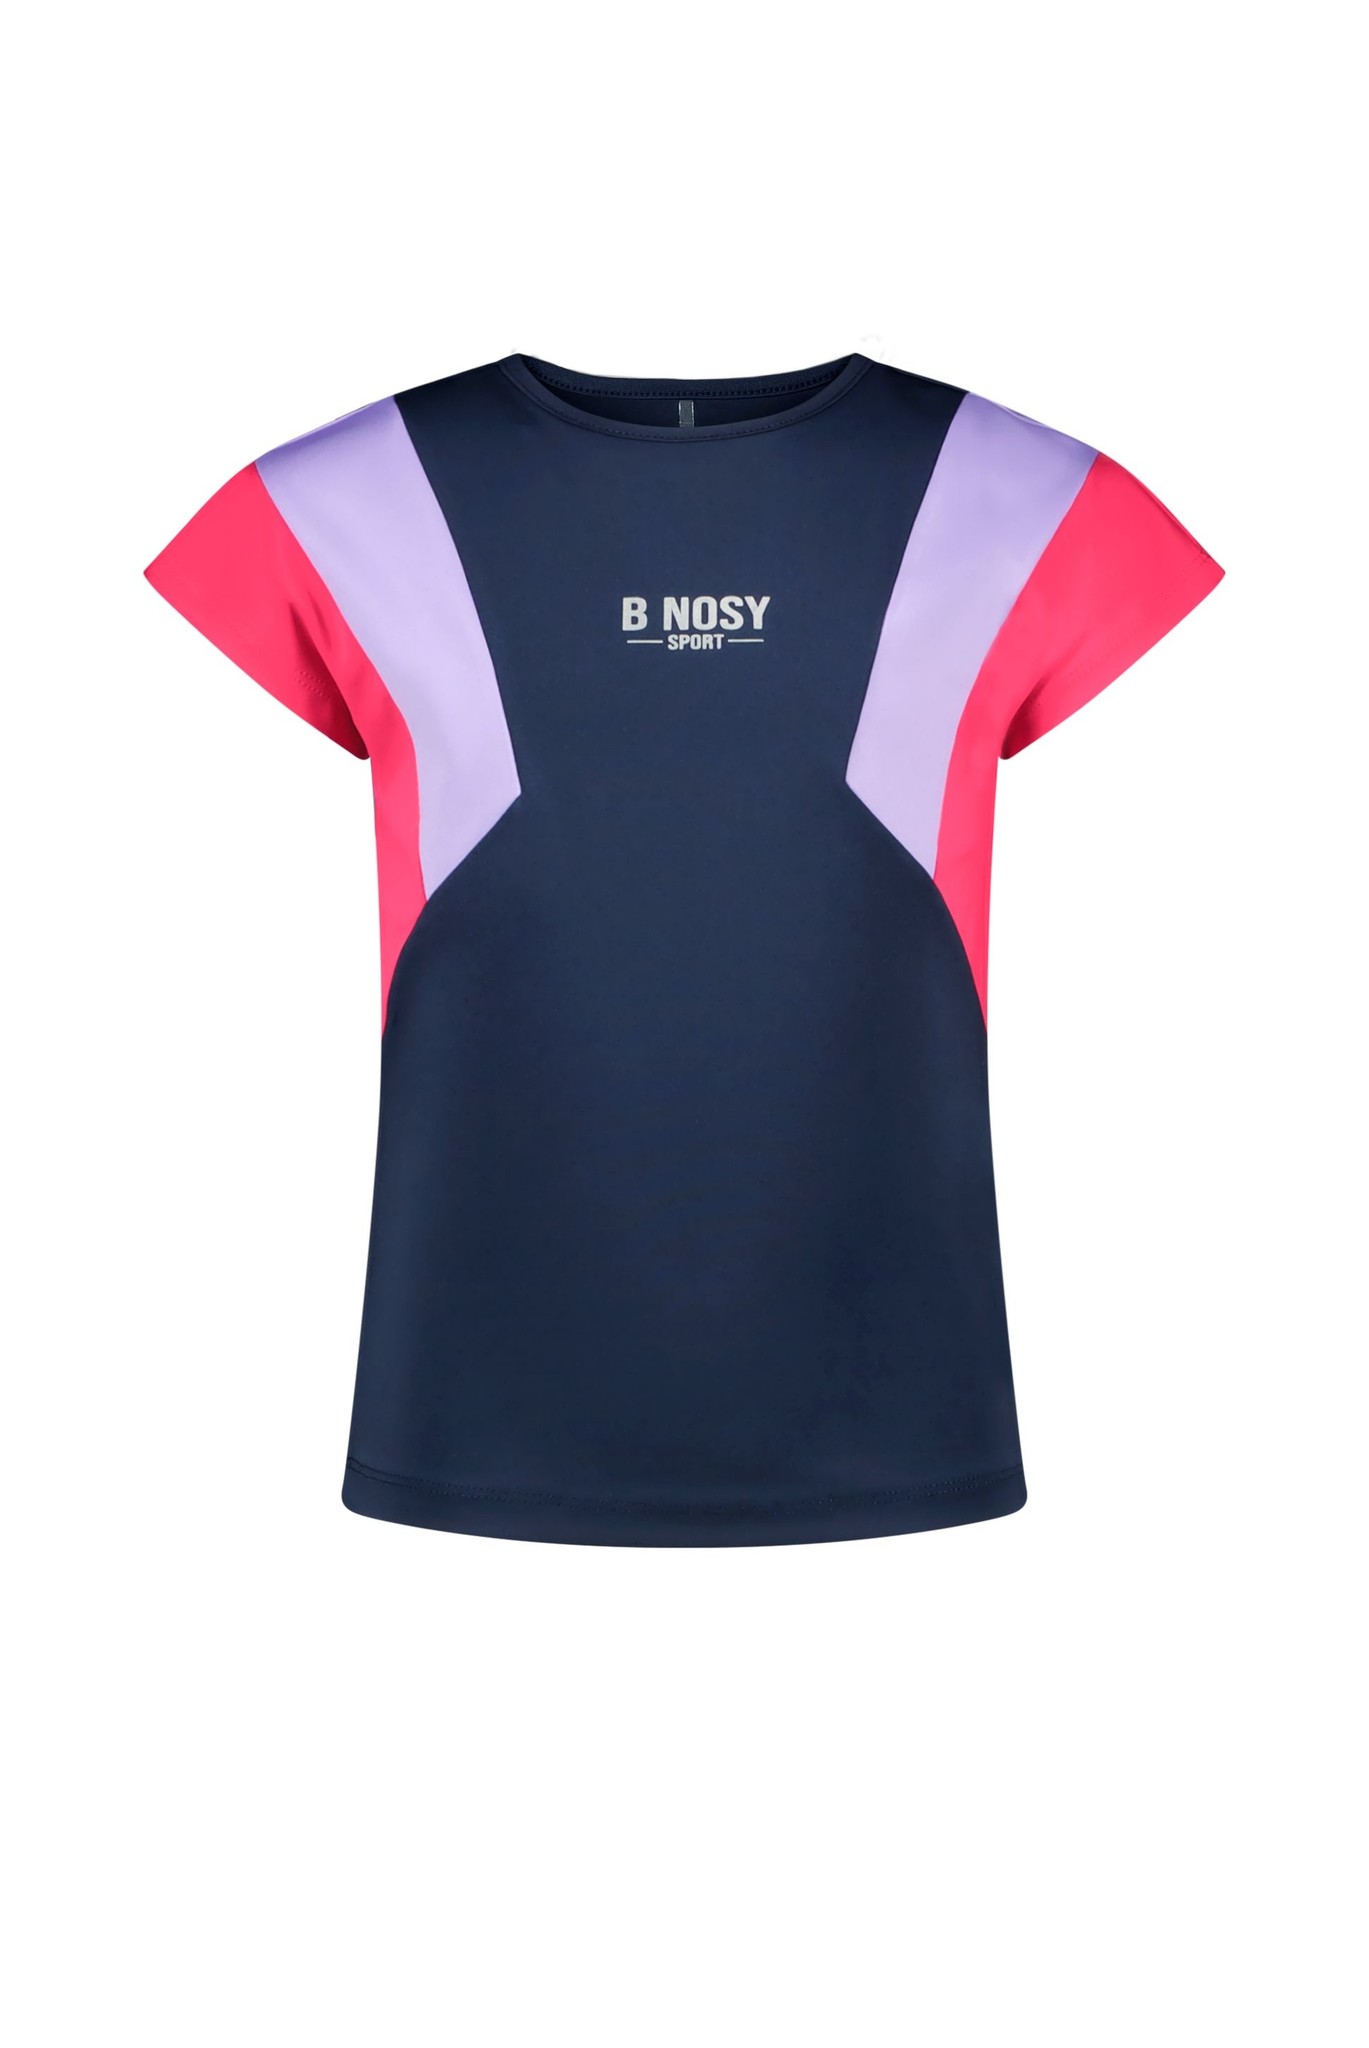 B.Nosy Meisjes t-shirt - Navy blauw